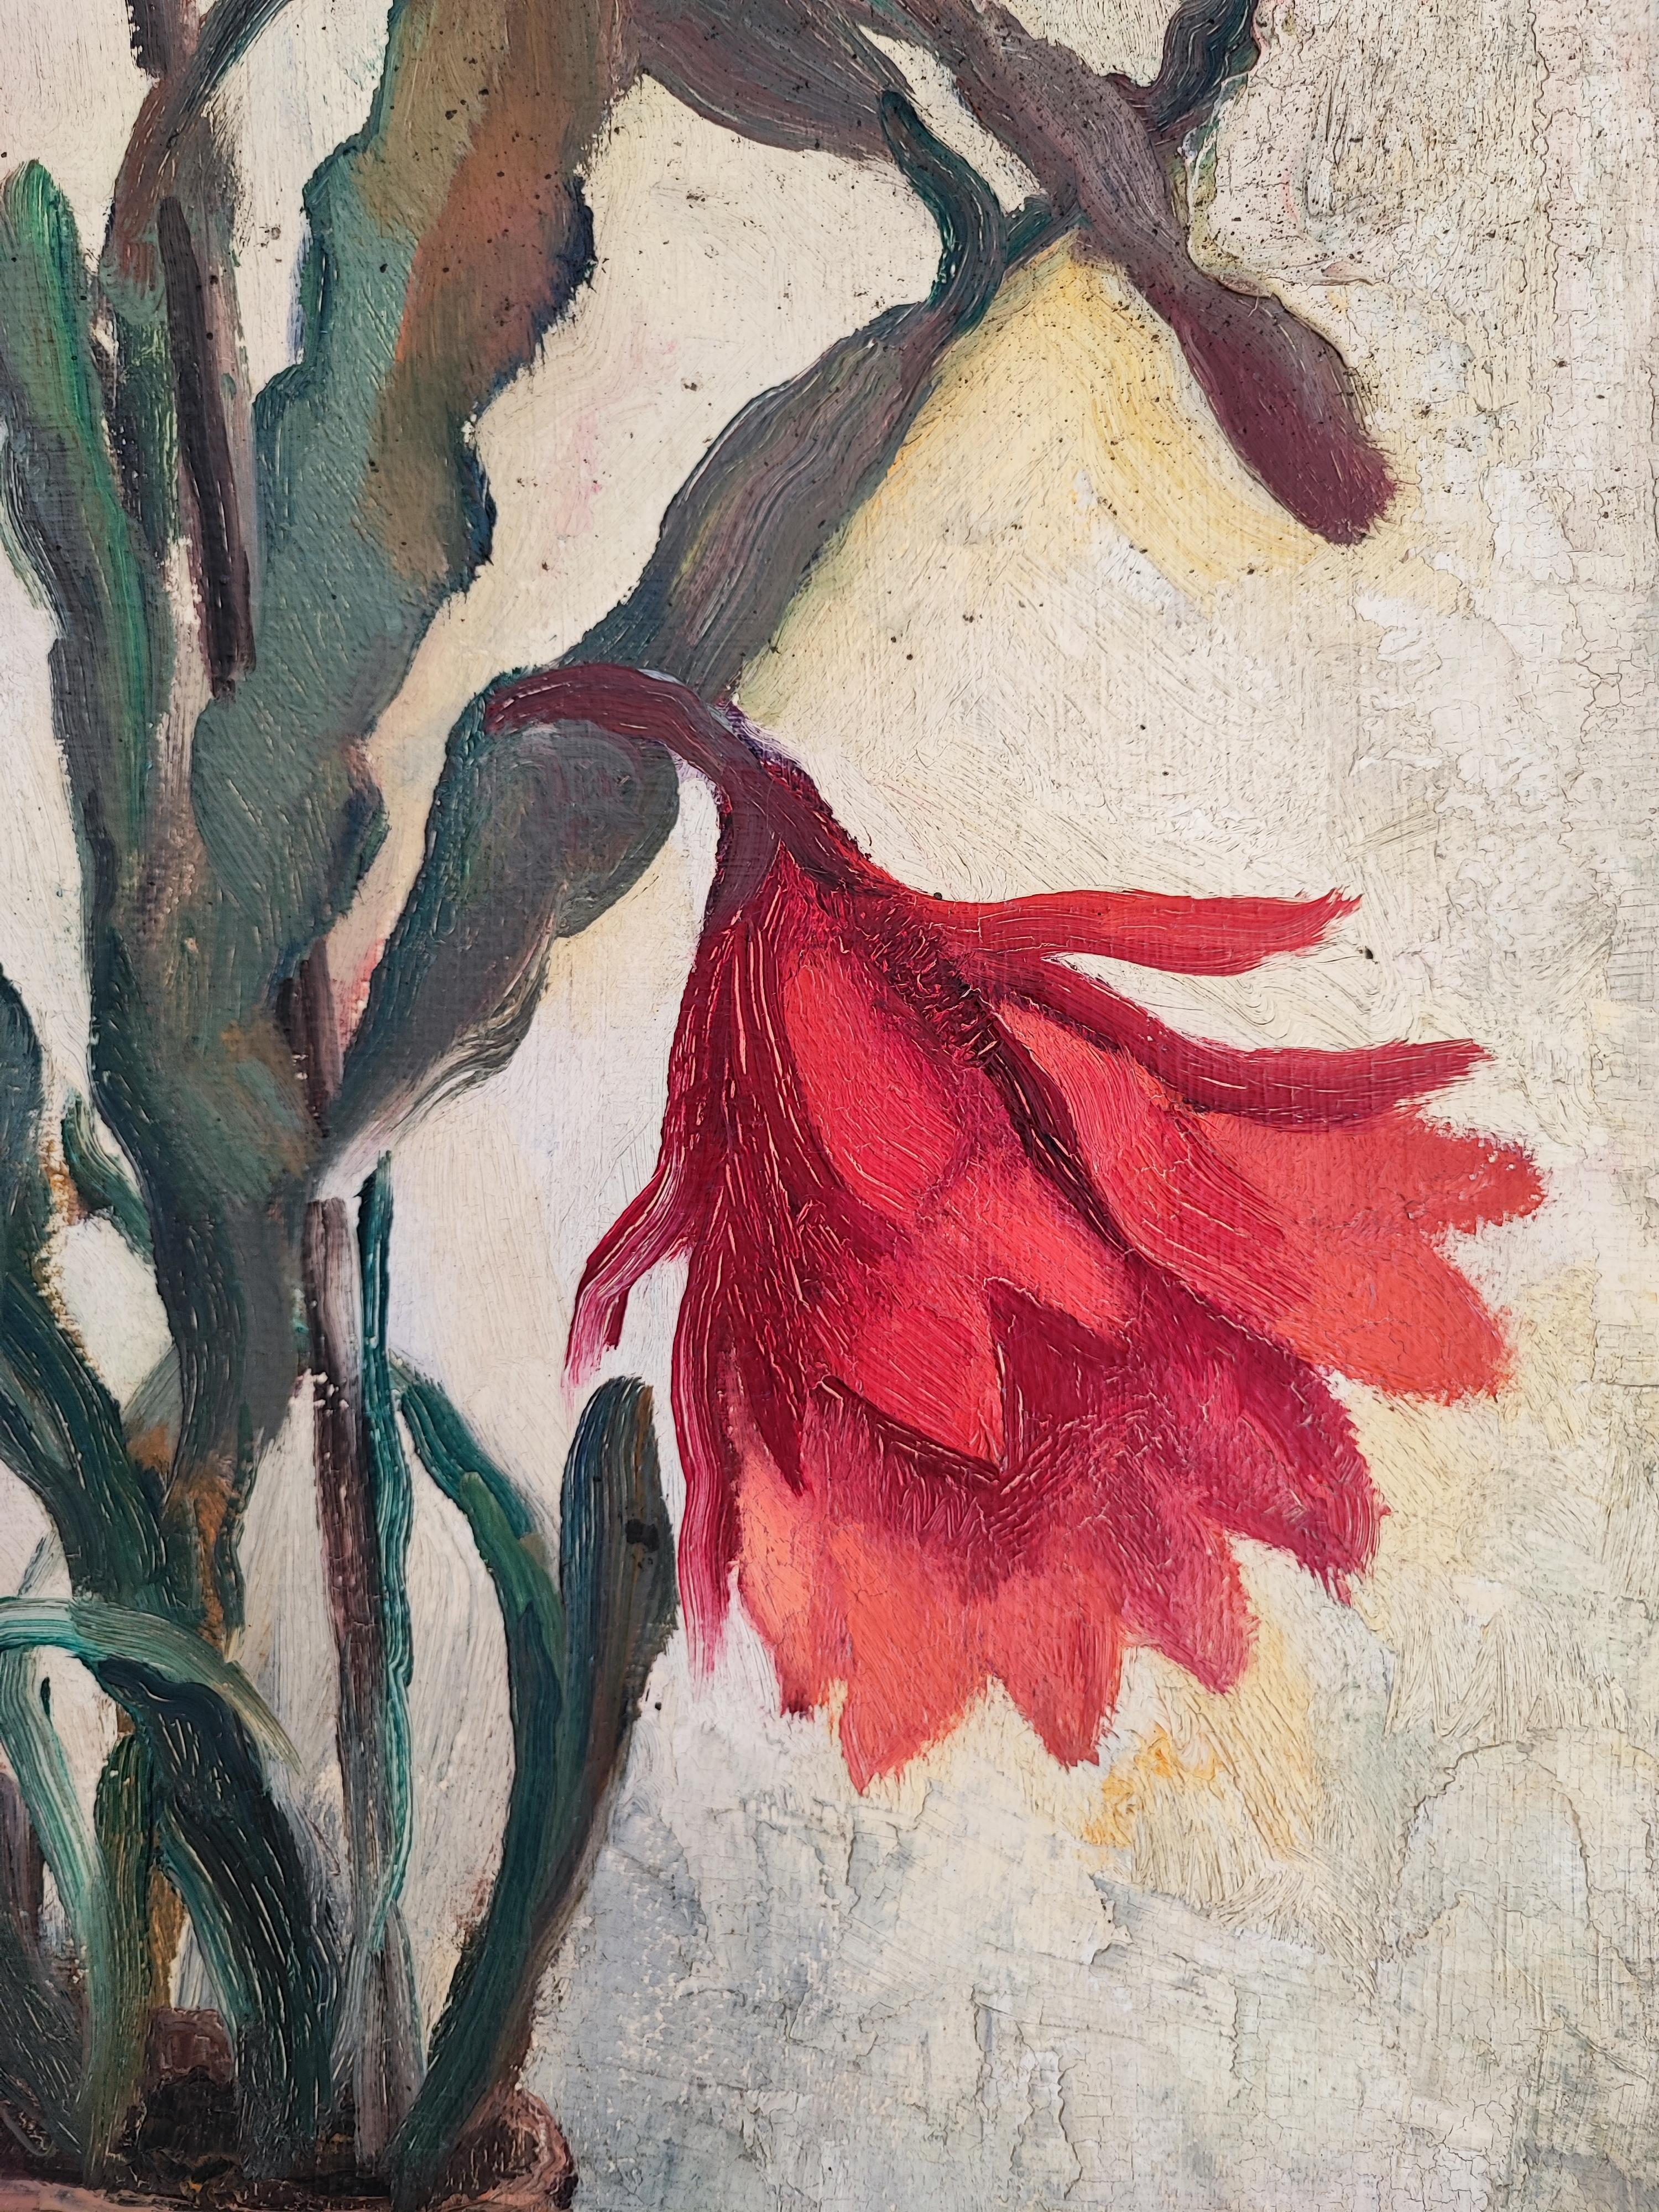 Blooming cacti - Modern Painting by Arne Siegfried